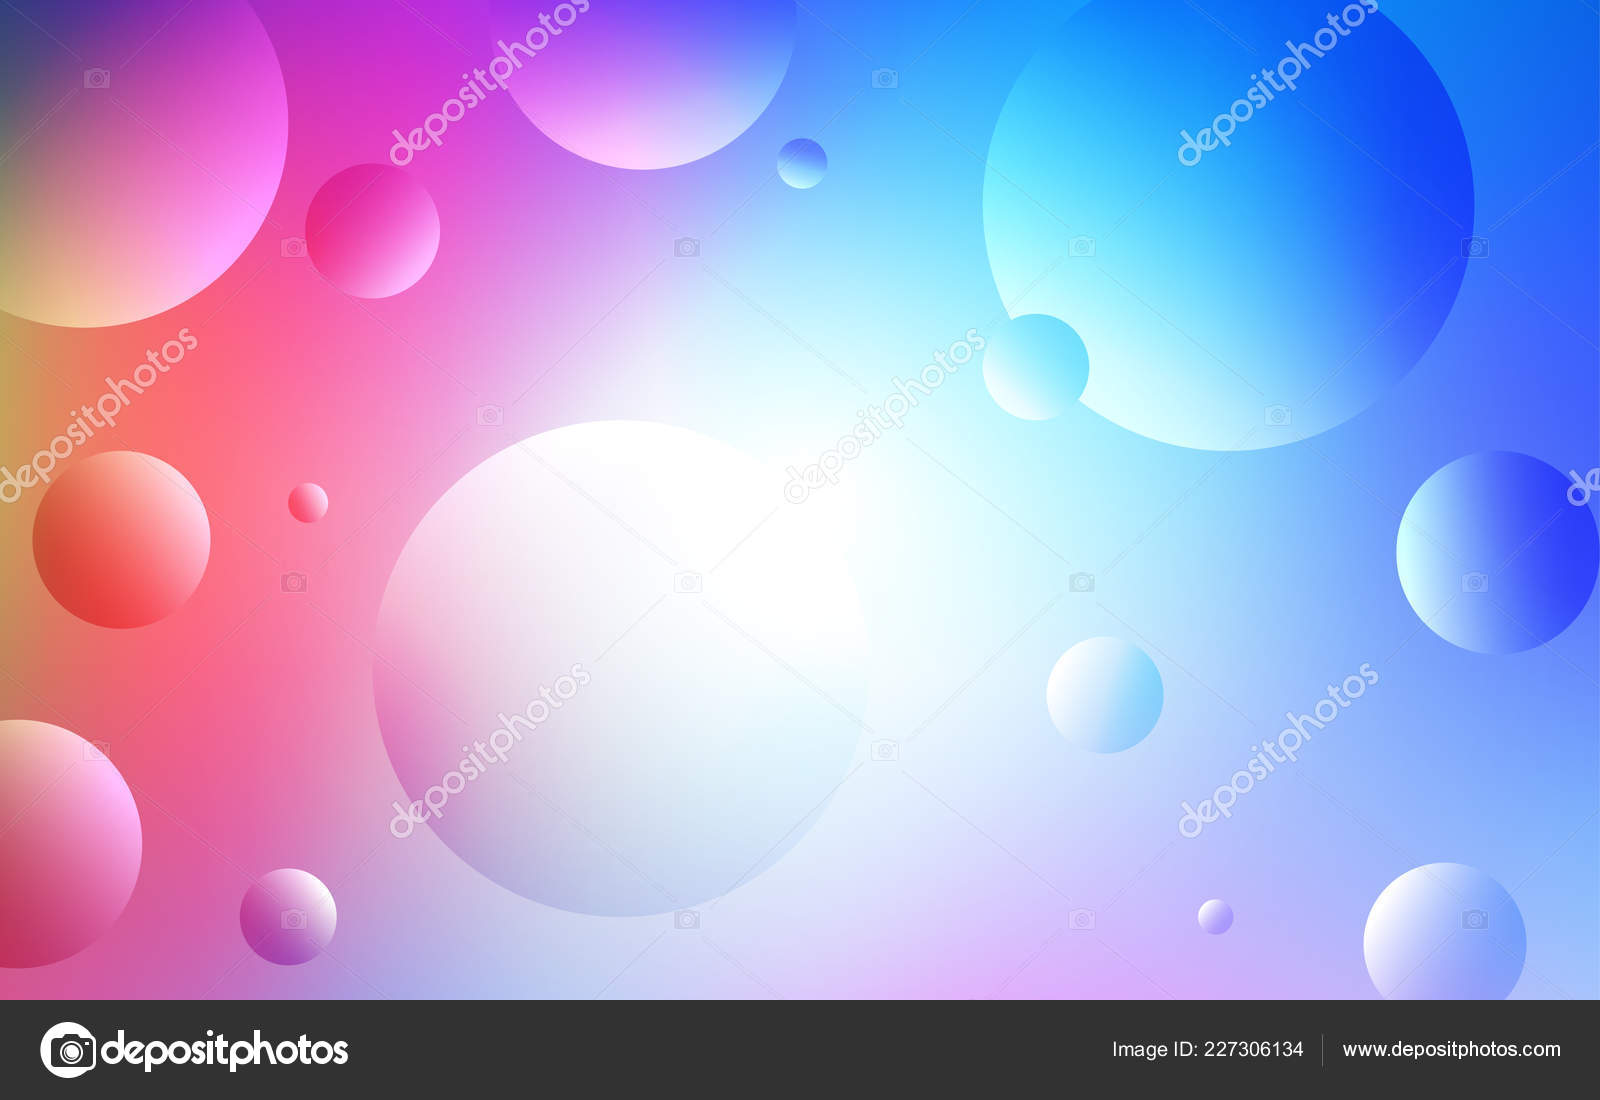 Light Multicolor Vector Background Bubbles Blurred Bubbles Abstract Background Colorful Vector Image By C Smaria Vector Stock